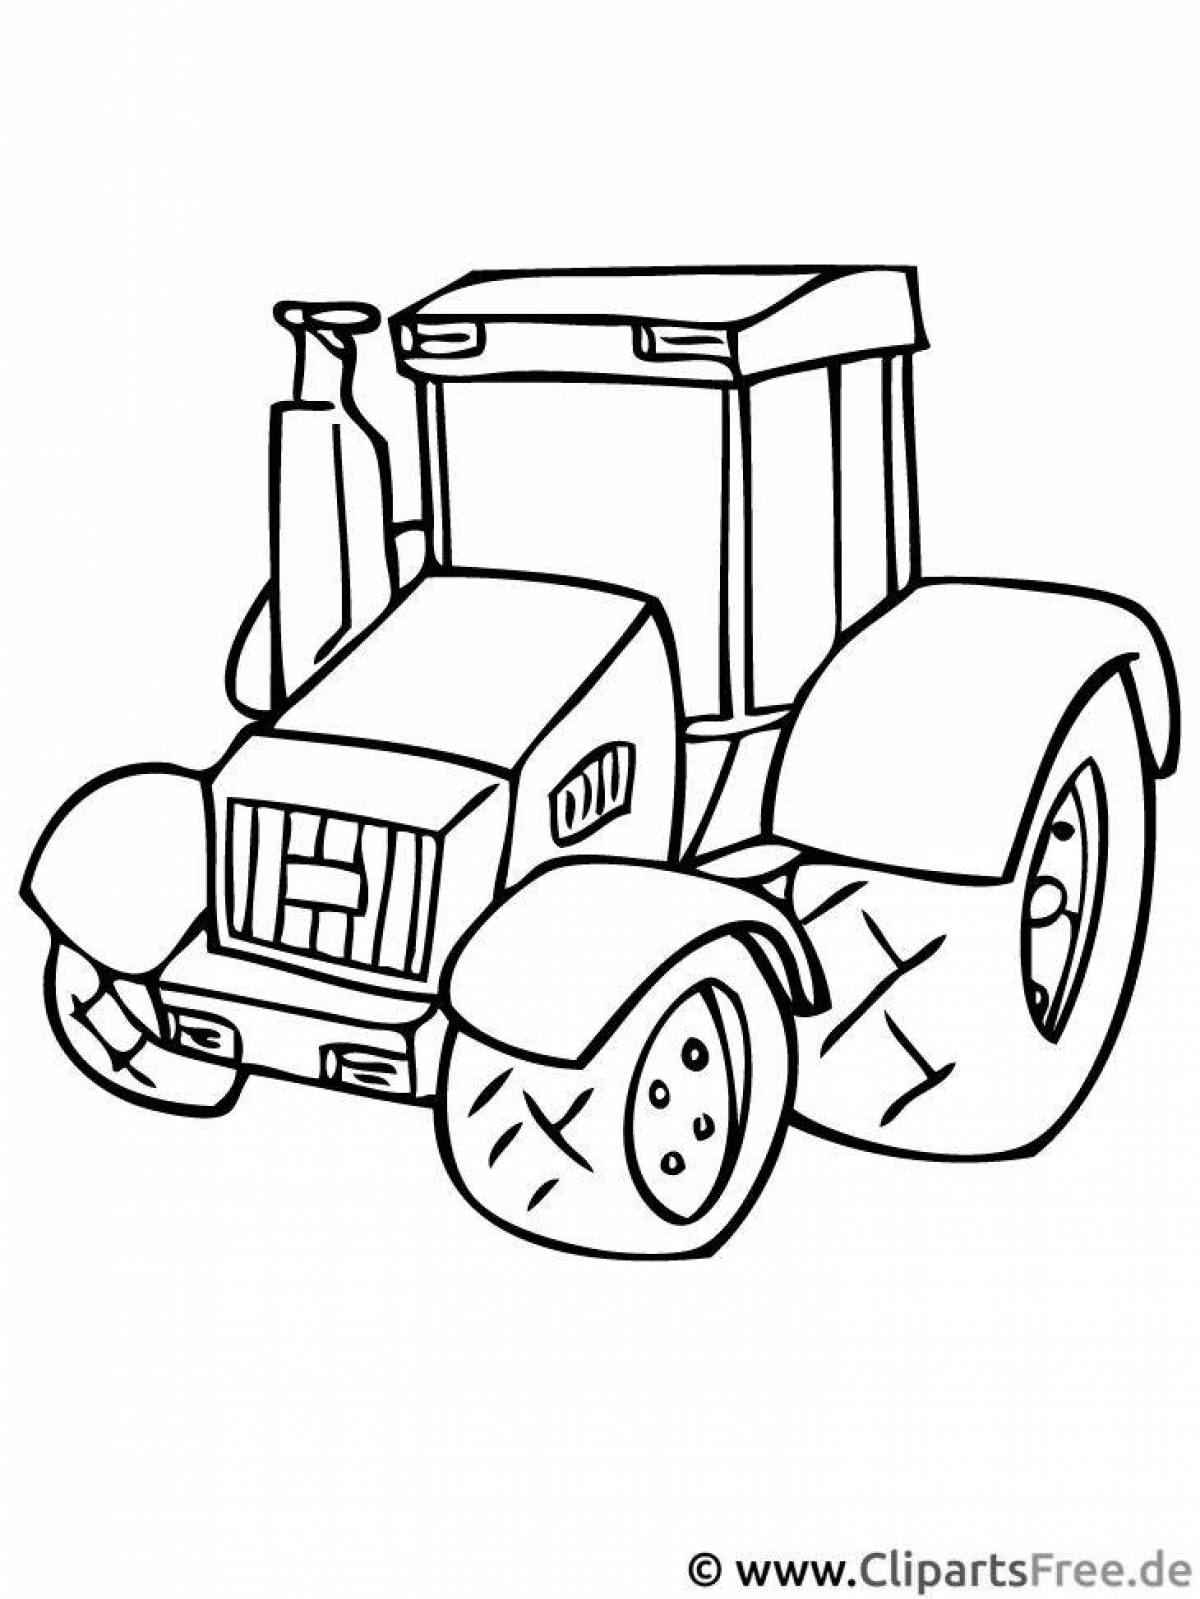 Трактор раскраска для детей 6 7 лет. Трактор т25 раскраска. Трактор Джон Дир раскраска. Raskraska для детей Traktor. Раскраска для малышей. Трактор.